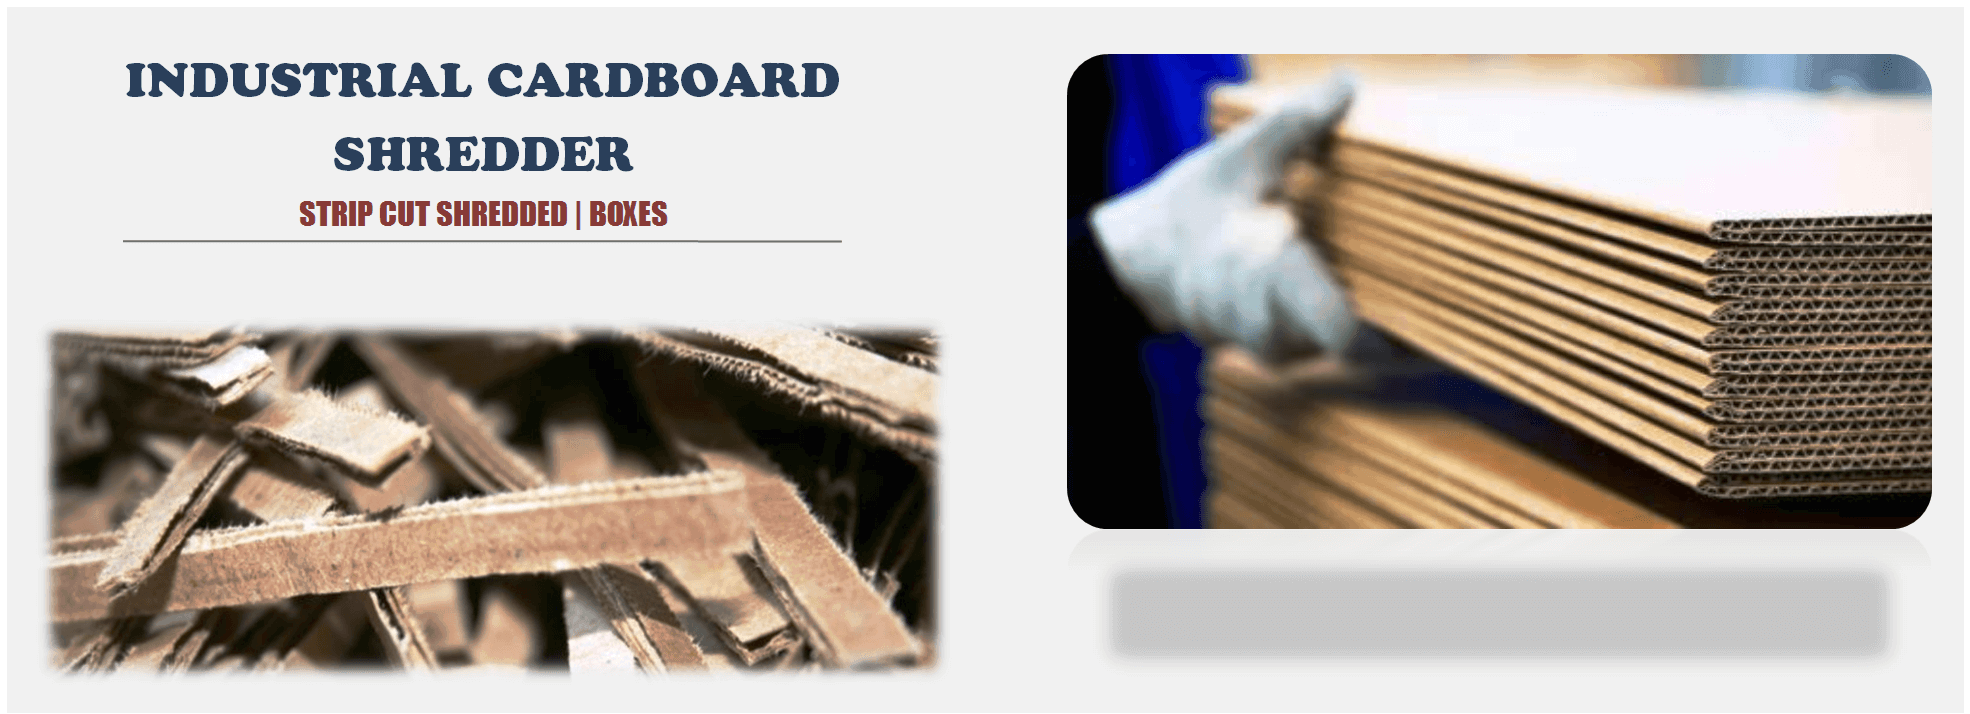 http://ezipac.com/wp-content/uploads/2019/01/Industrial-Cardboard-Shredder-Banner.png